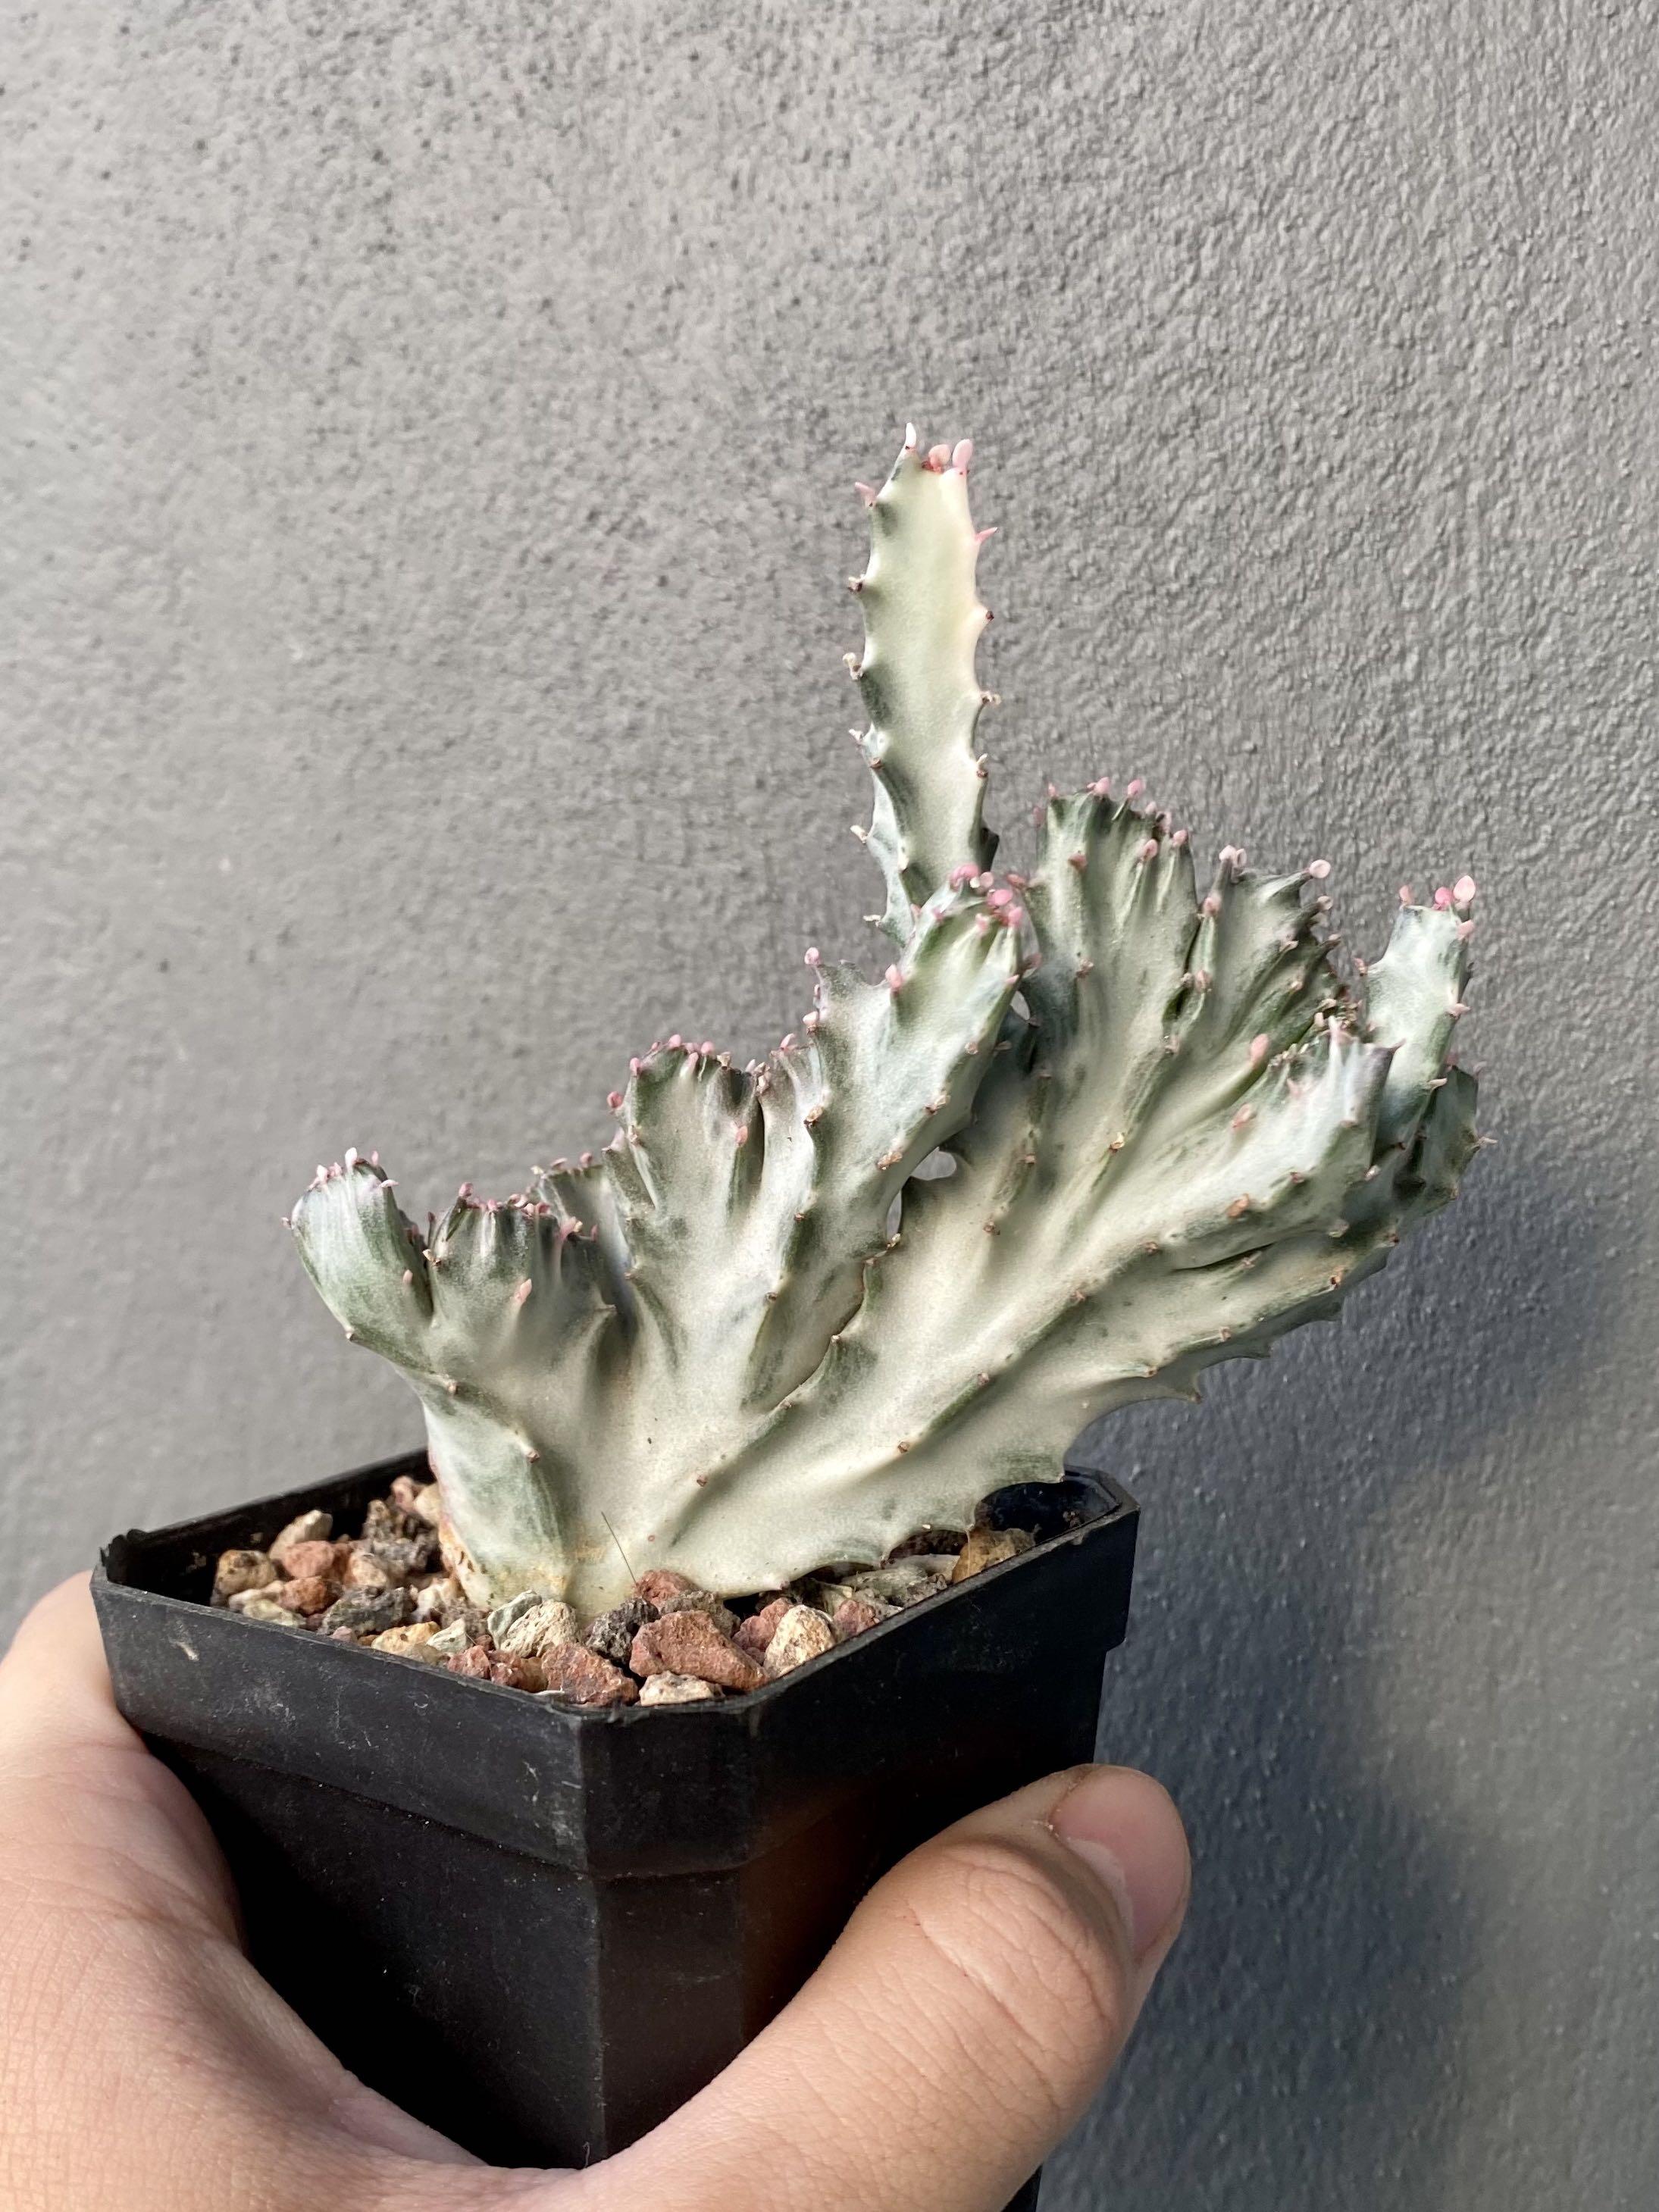 Cactus - Euphorbia Lactea Cv. White Ghost Cristata - 仙人掌 - 白龙骨缀, Furniture  & Home Living, Gardening, Plants & Seeds on Carousell